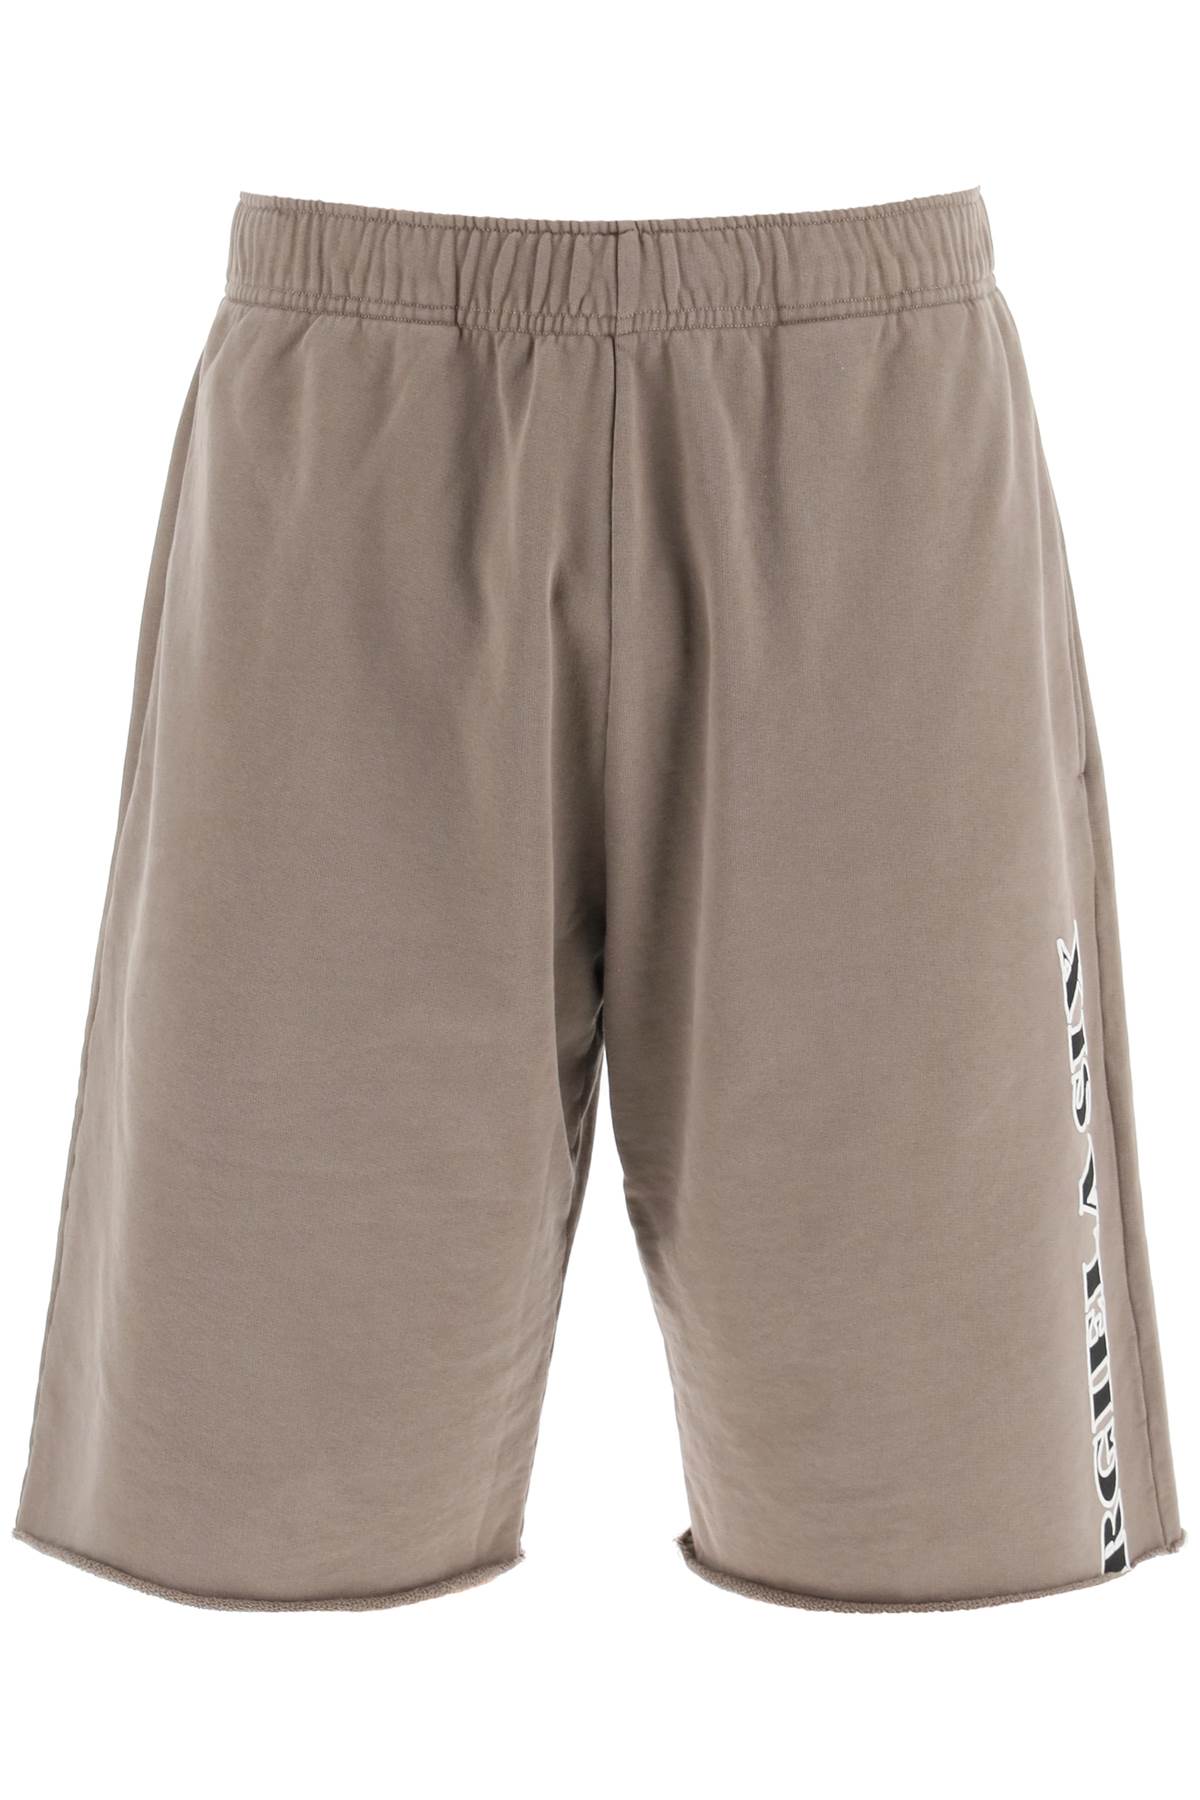 Jersey Bermuda Shorts